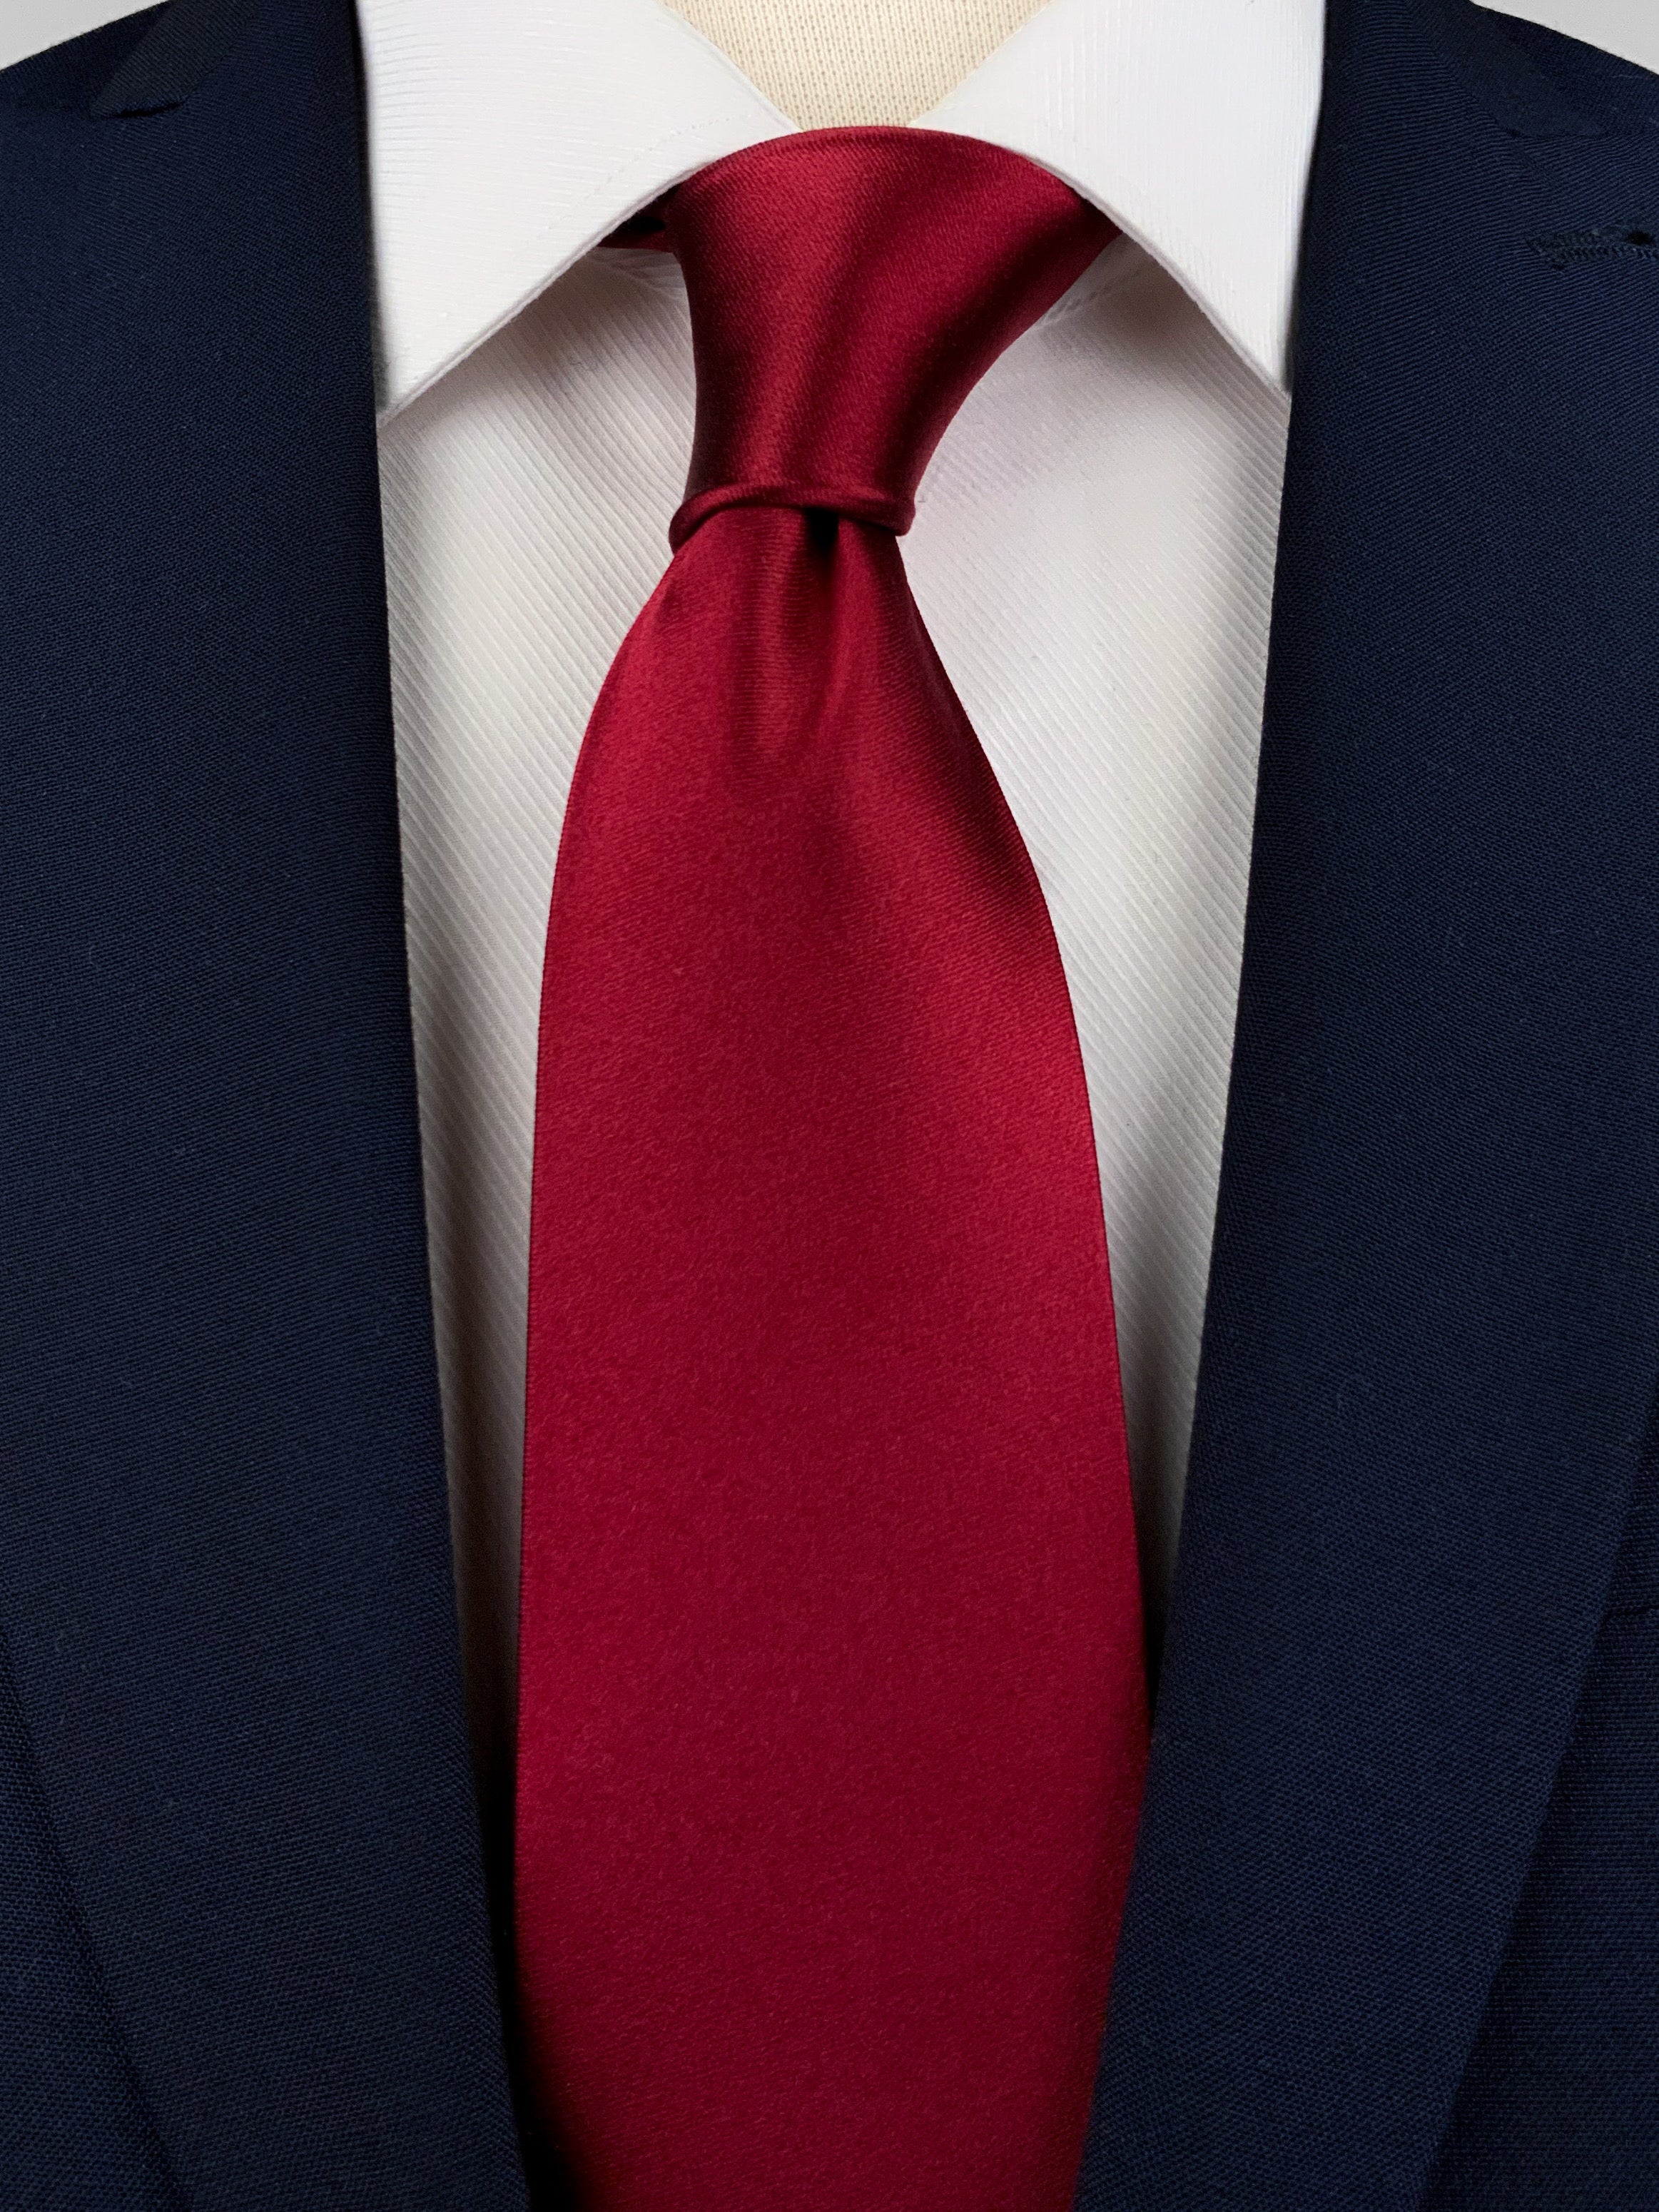 University of Pennsylvania Silk Tie #7 - Dark Red & Blue